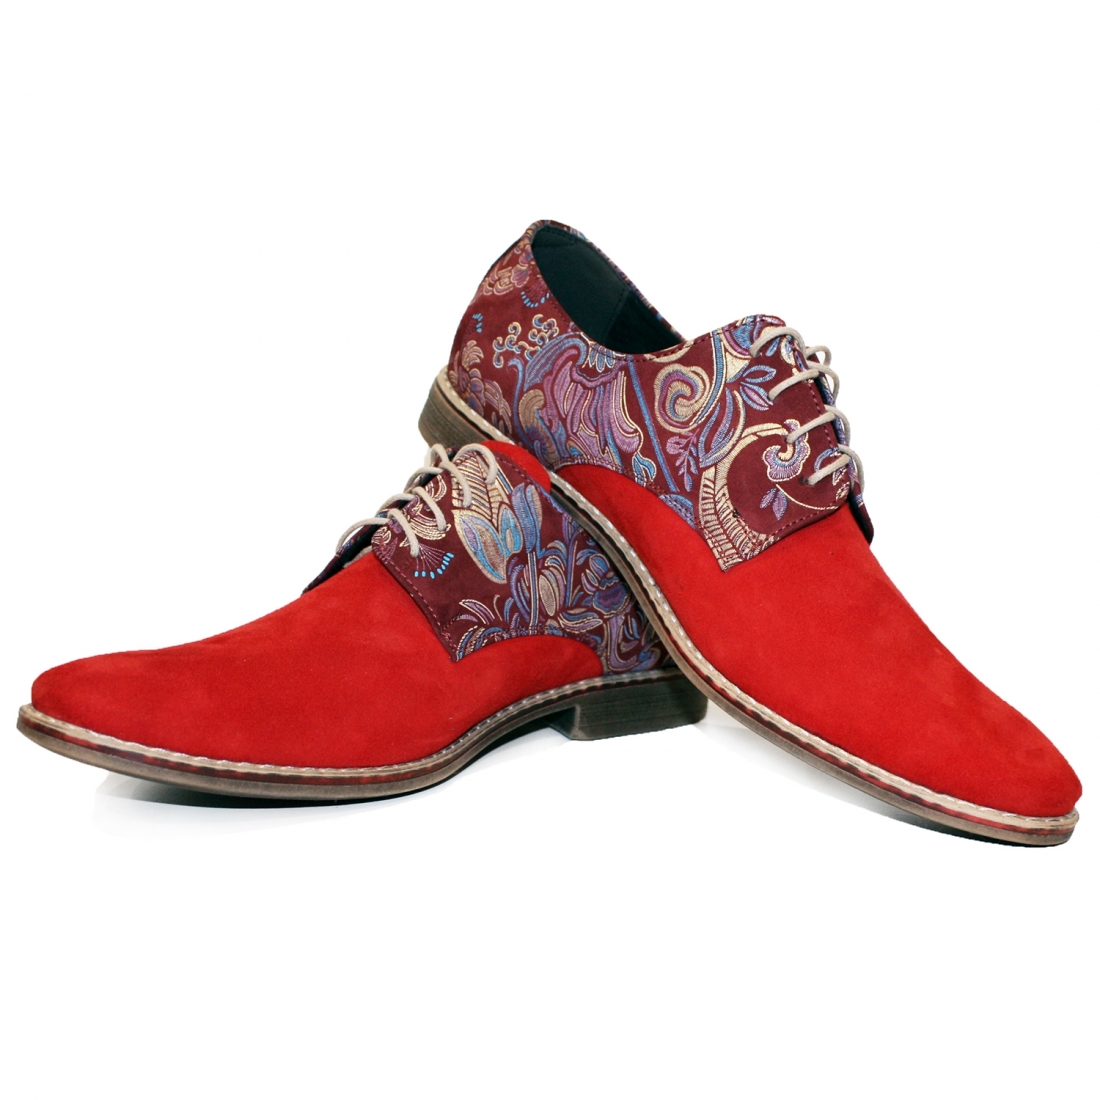 Modello Skreelo - Zapatos Clásicos - Handmade Colorful Italian Leather Shoes